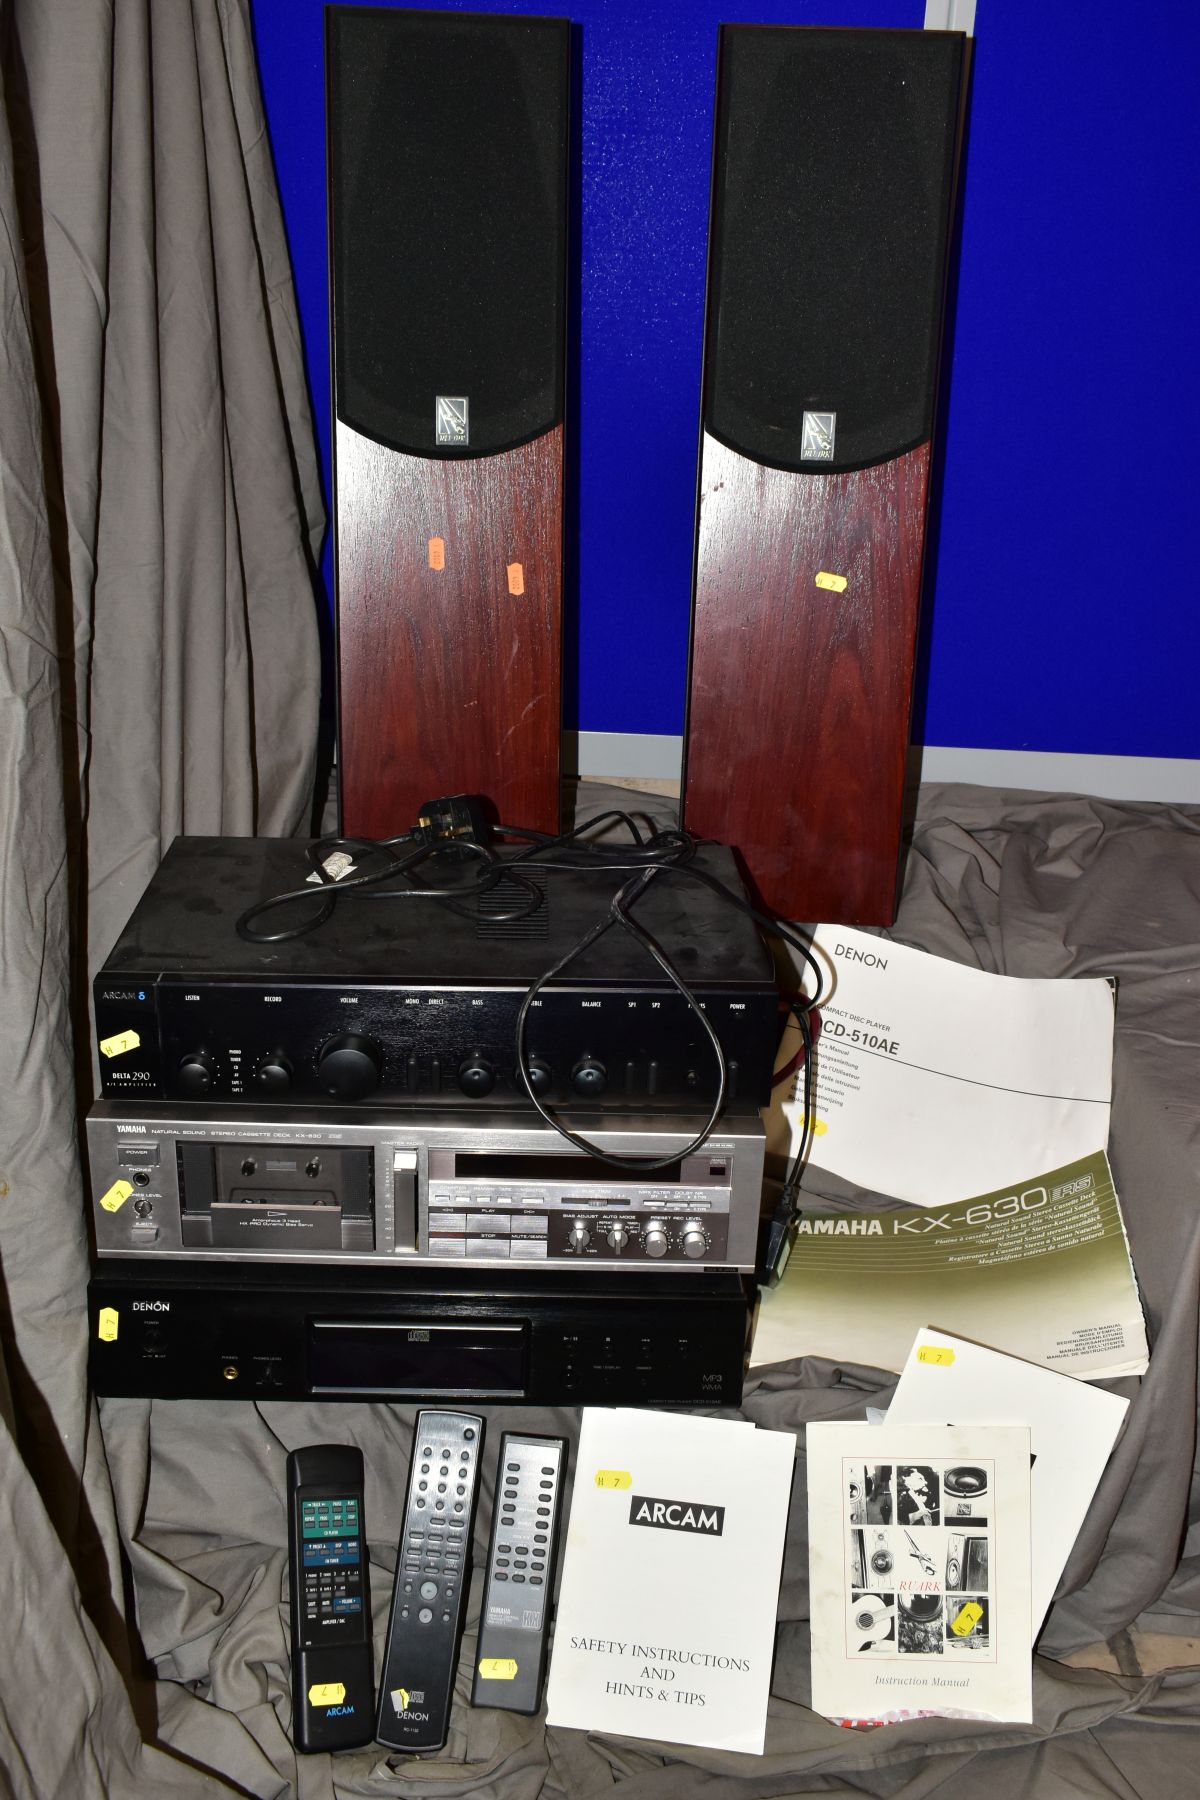 AN ARCAM DELTA 290 INTERGRATED AMPLIFIER, a Yamaha KX-630 Tape Player, a Denon DCD 510AE CD player